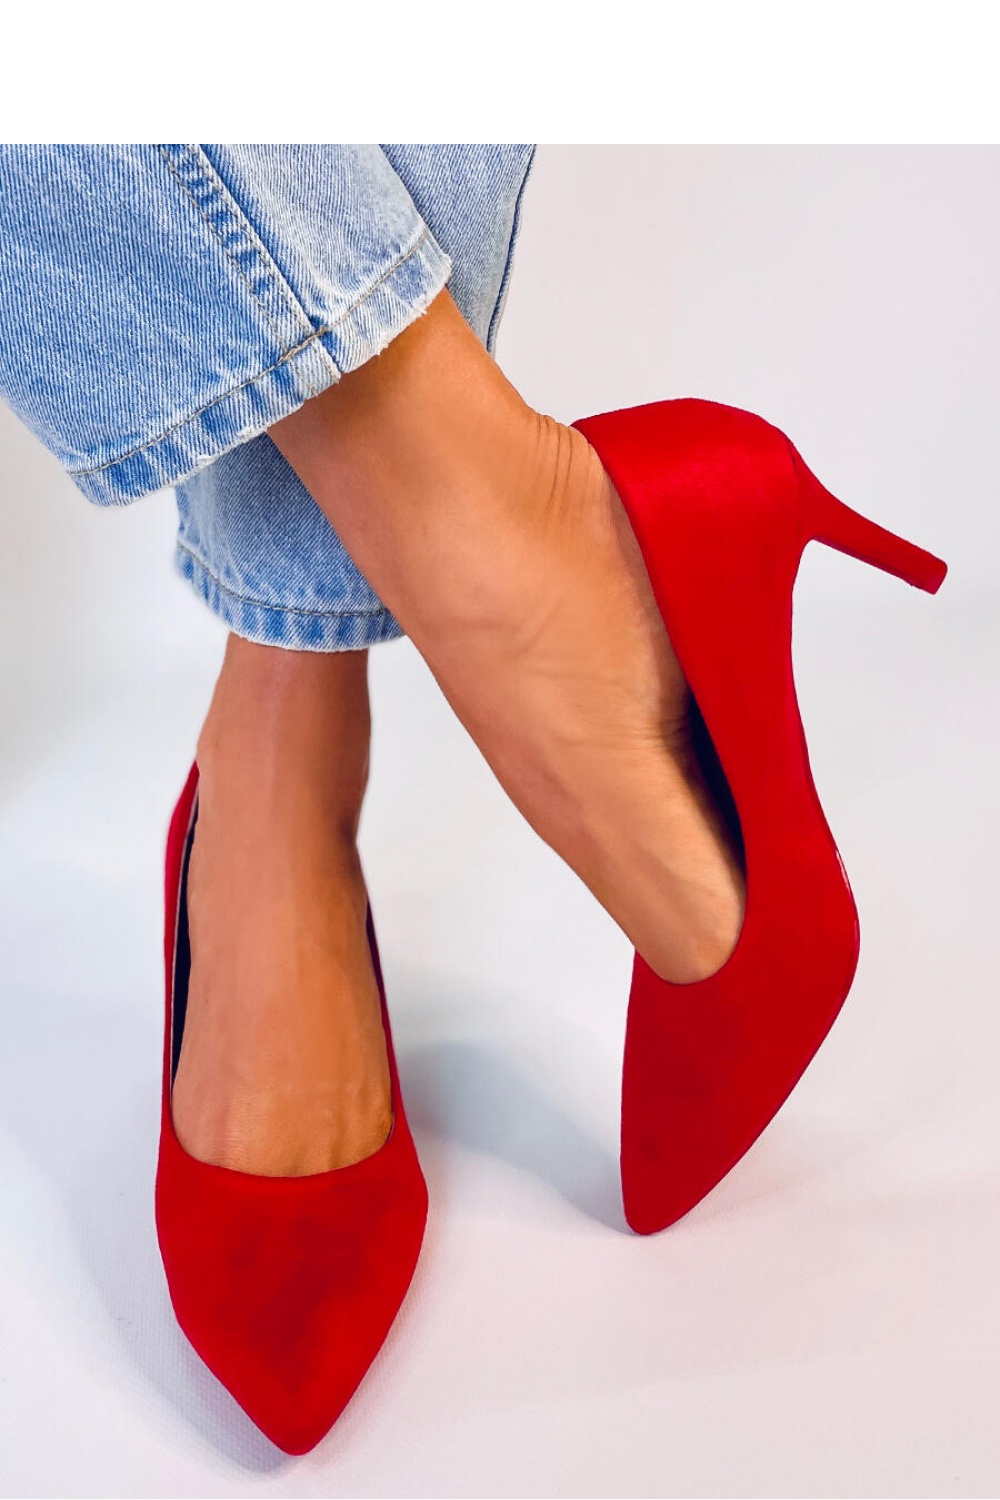  High heels model 178788 Inello  red